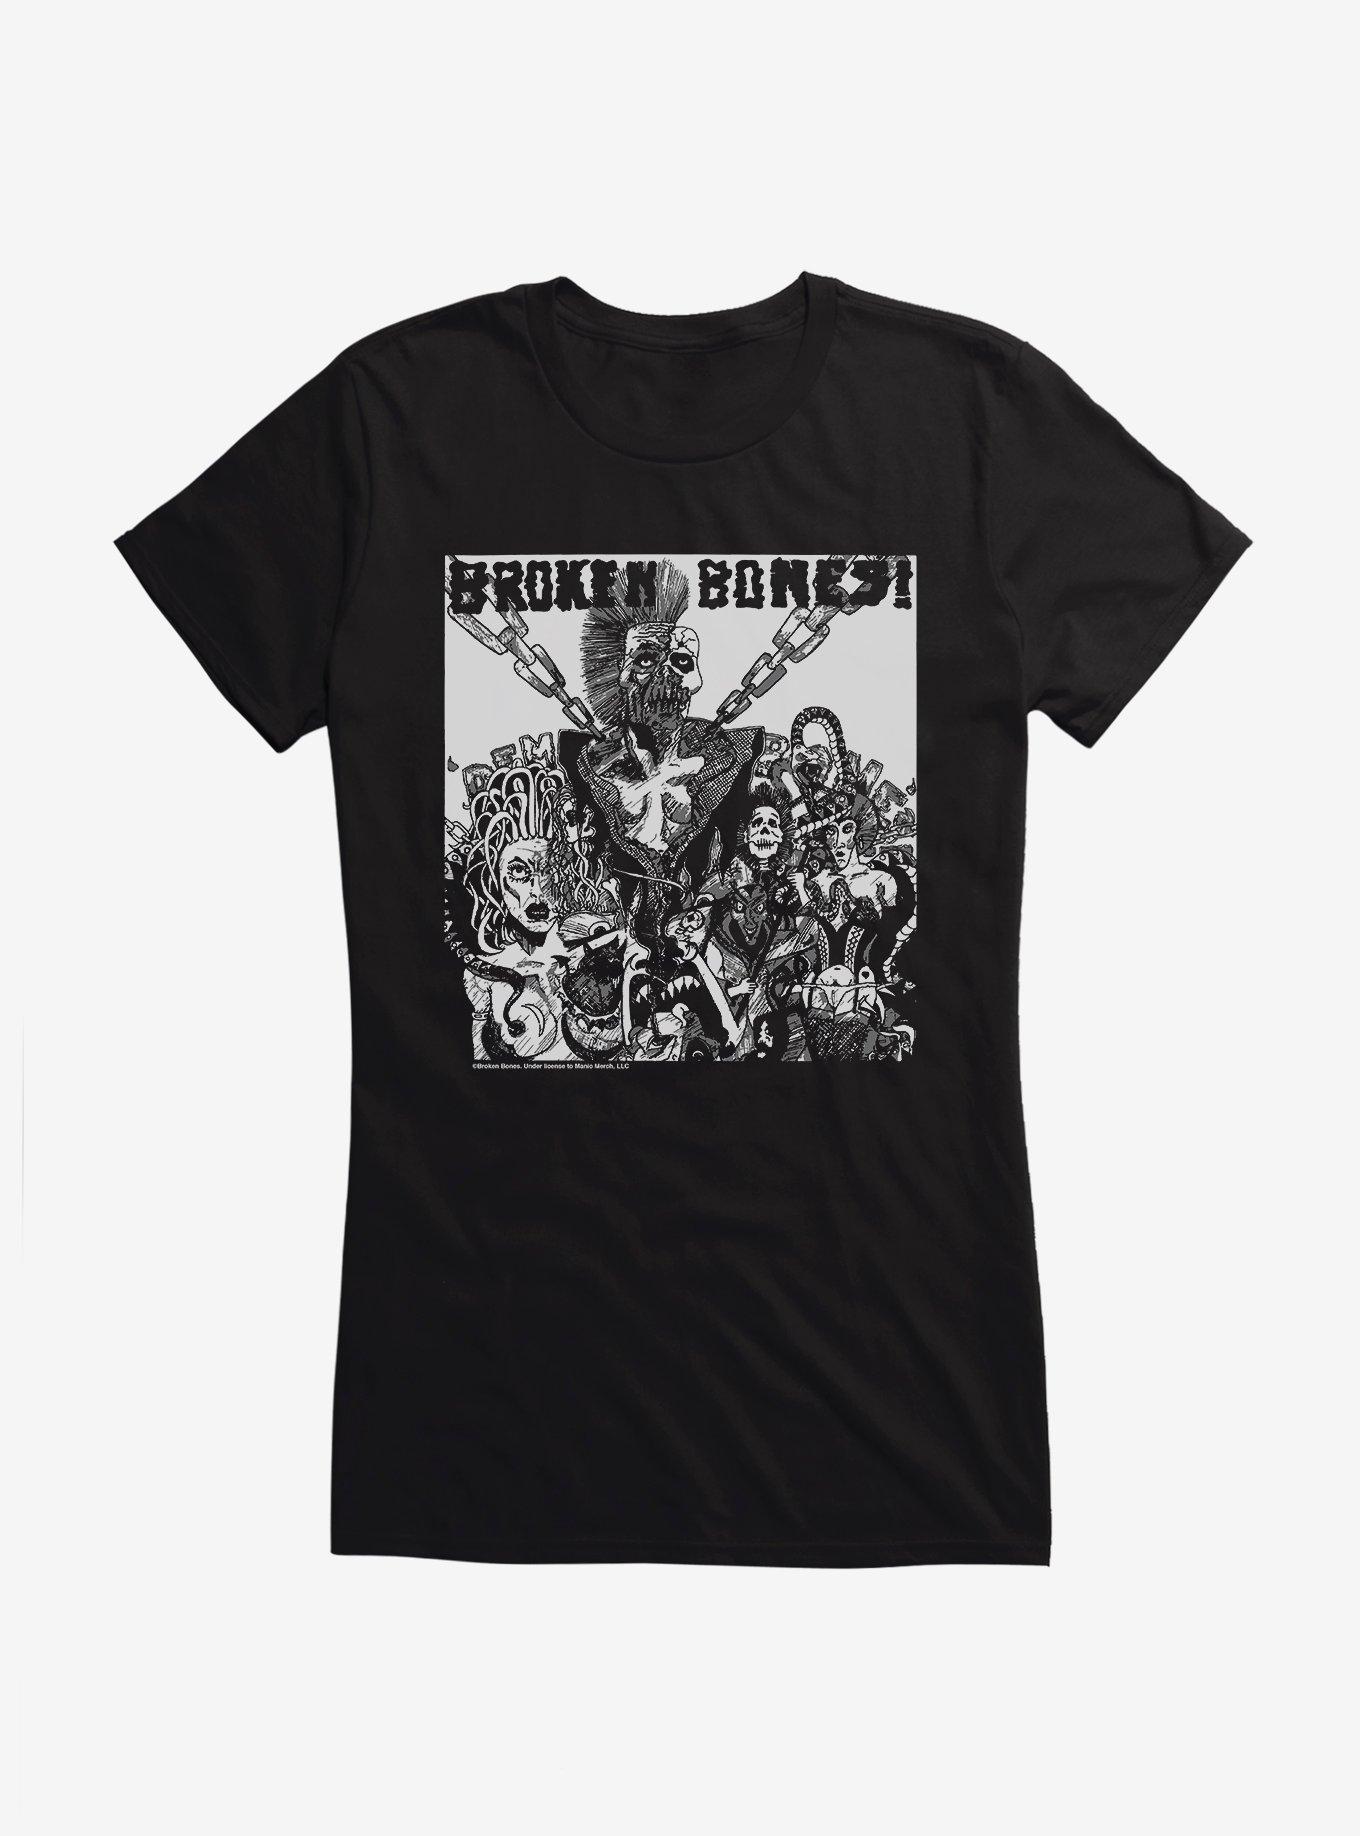 Hot Topic Broken Bones Dem Album Cover Girls T-Shirt | CoolSprings